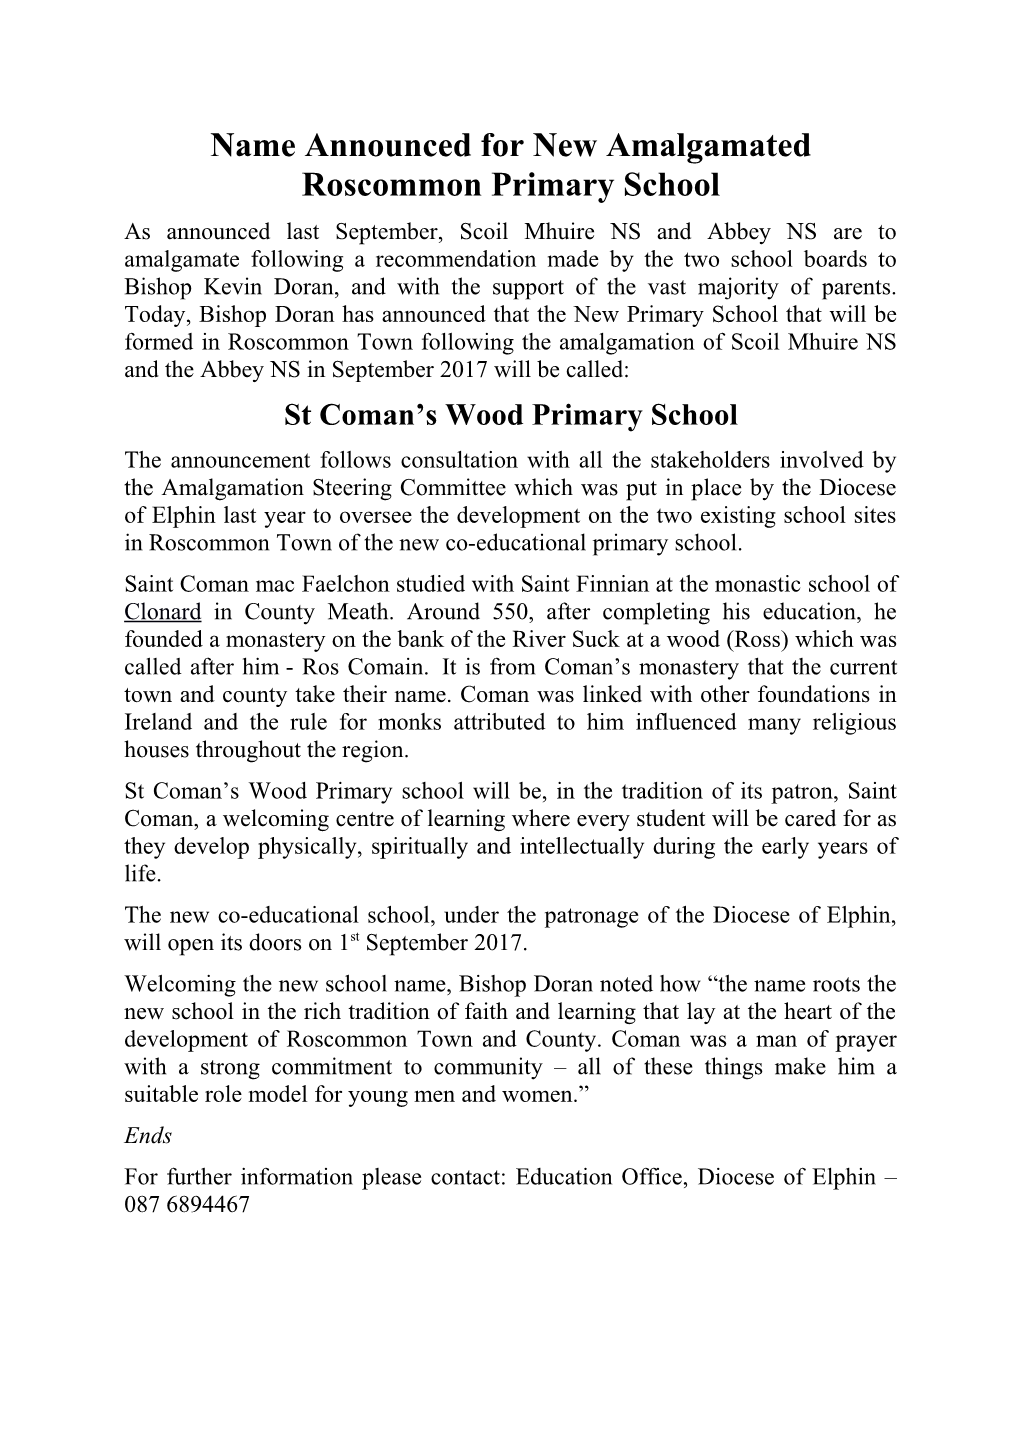 Name Announced for New Amalgamated Roscommon Primary School